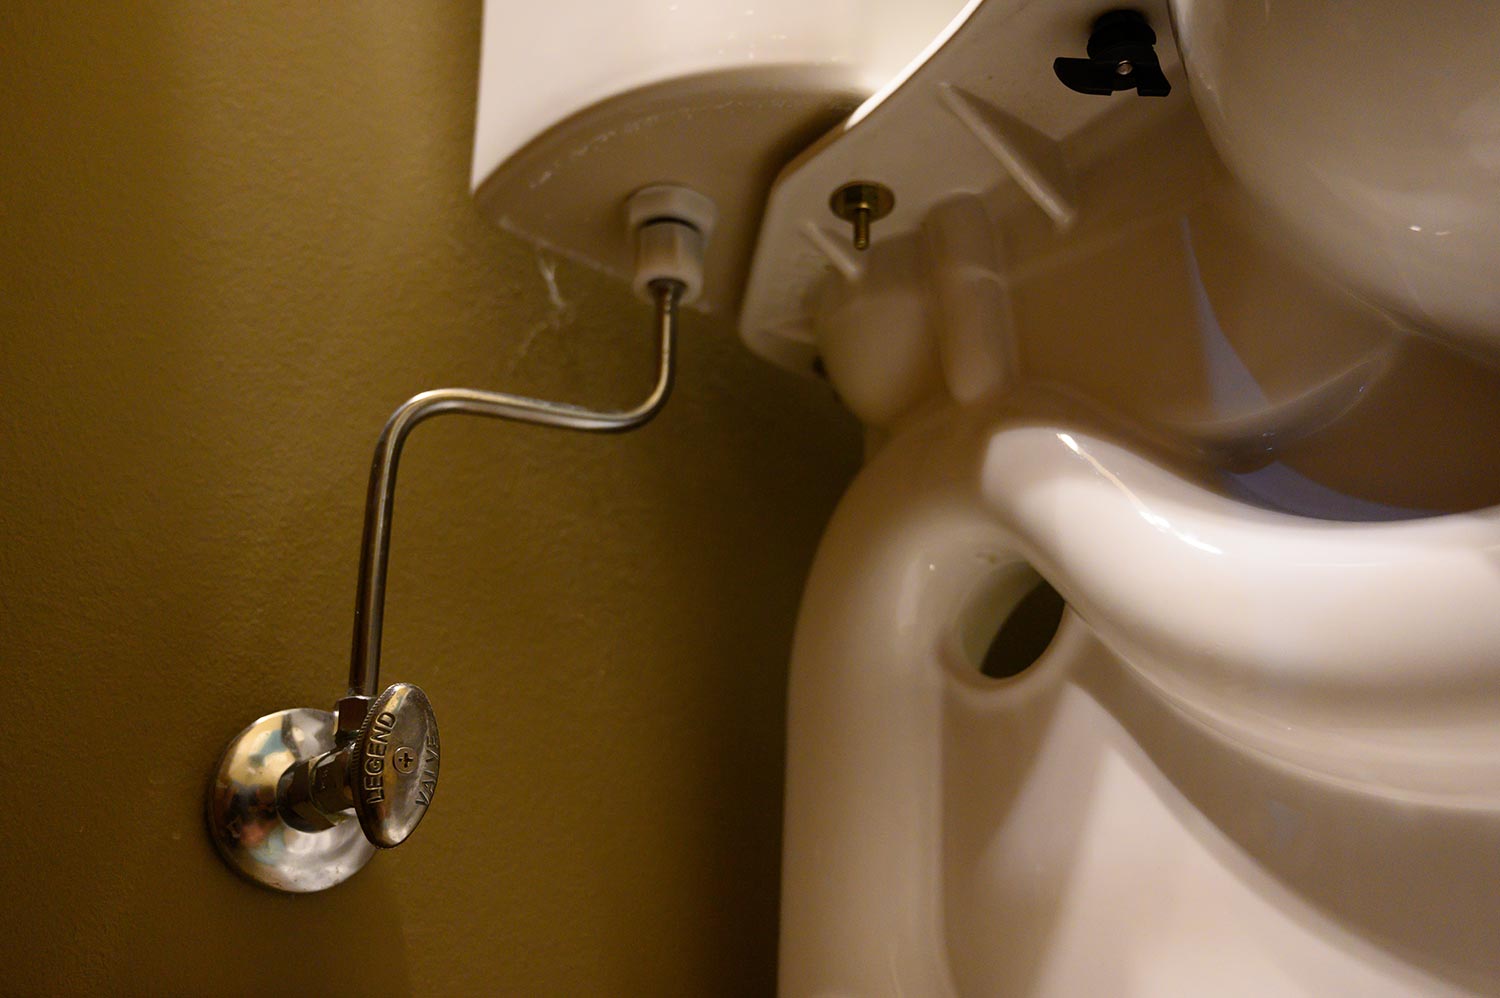 Residential toilet water shutoff valve